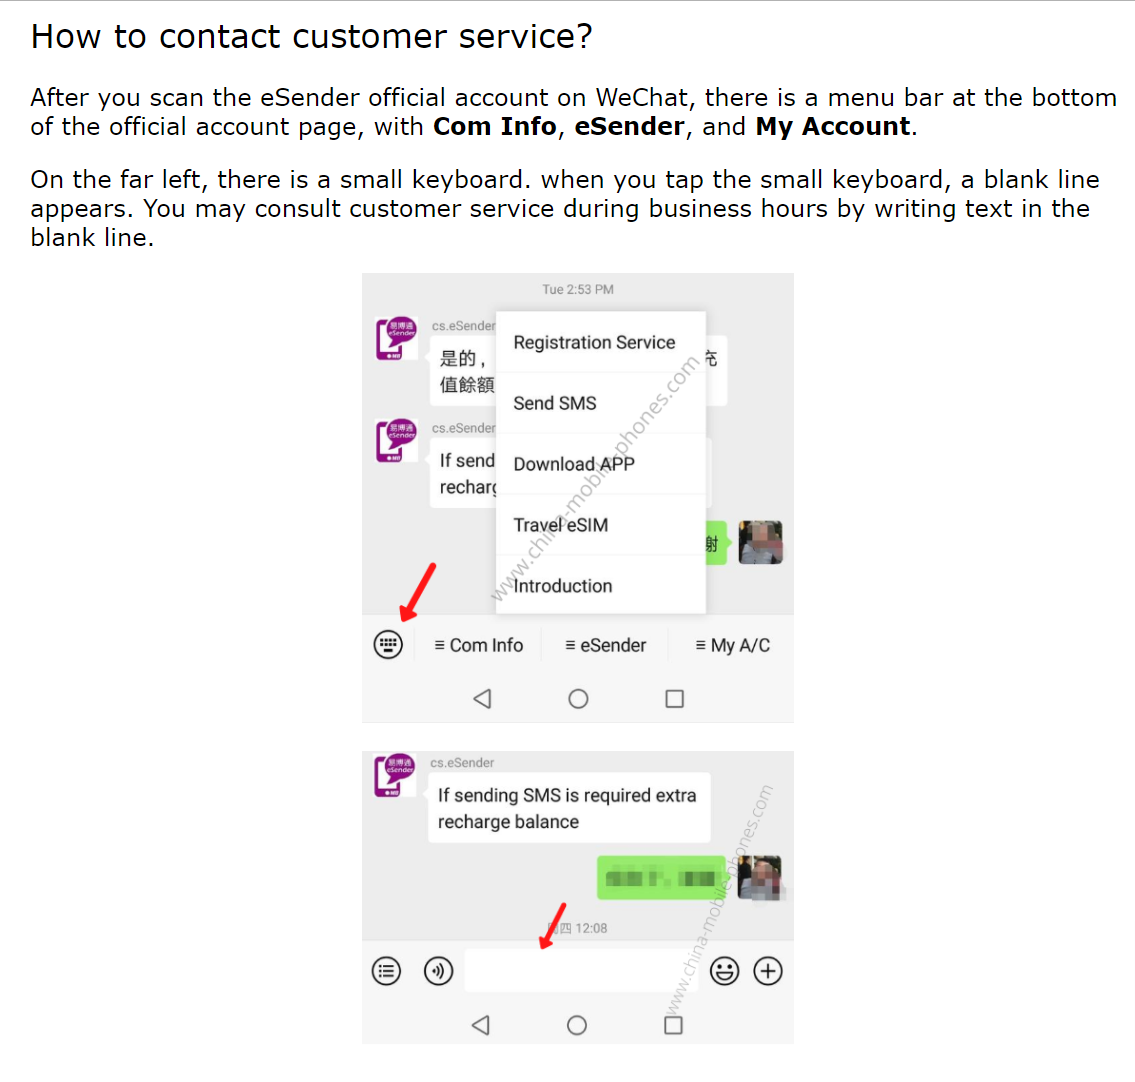 Customer service details